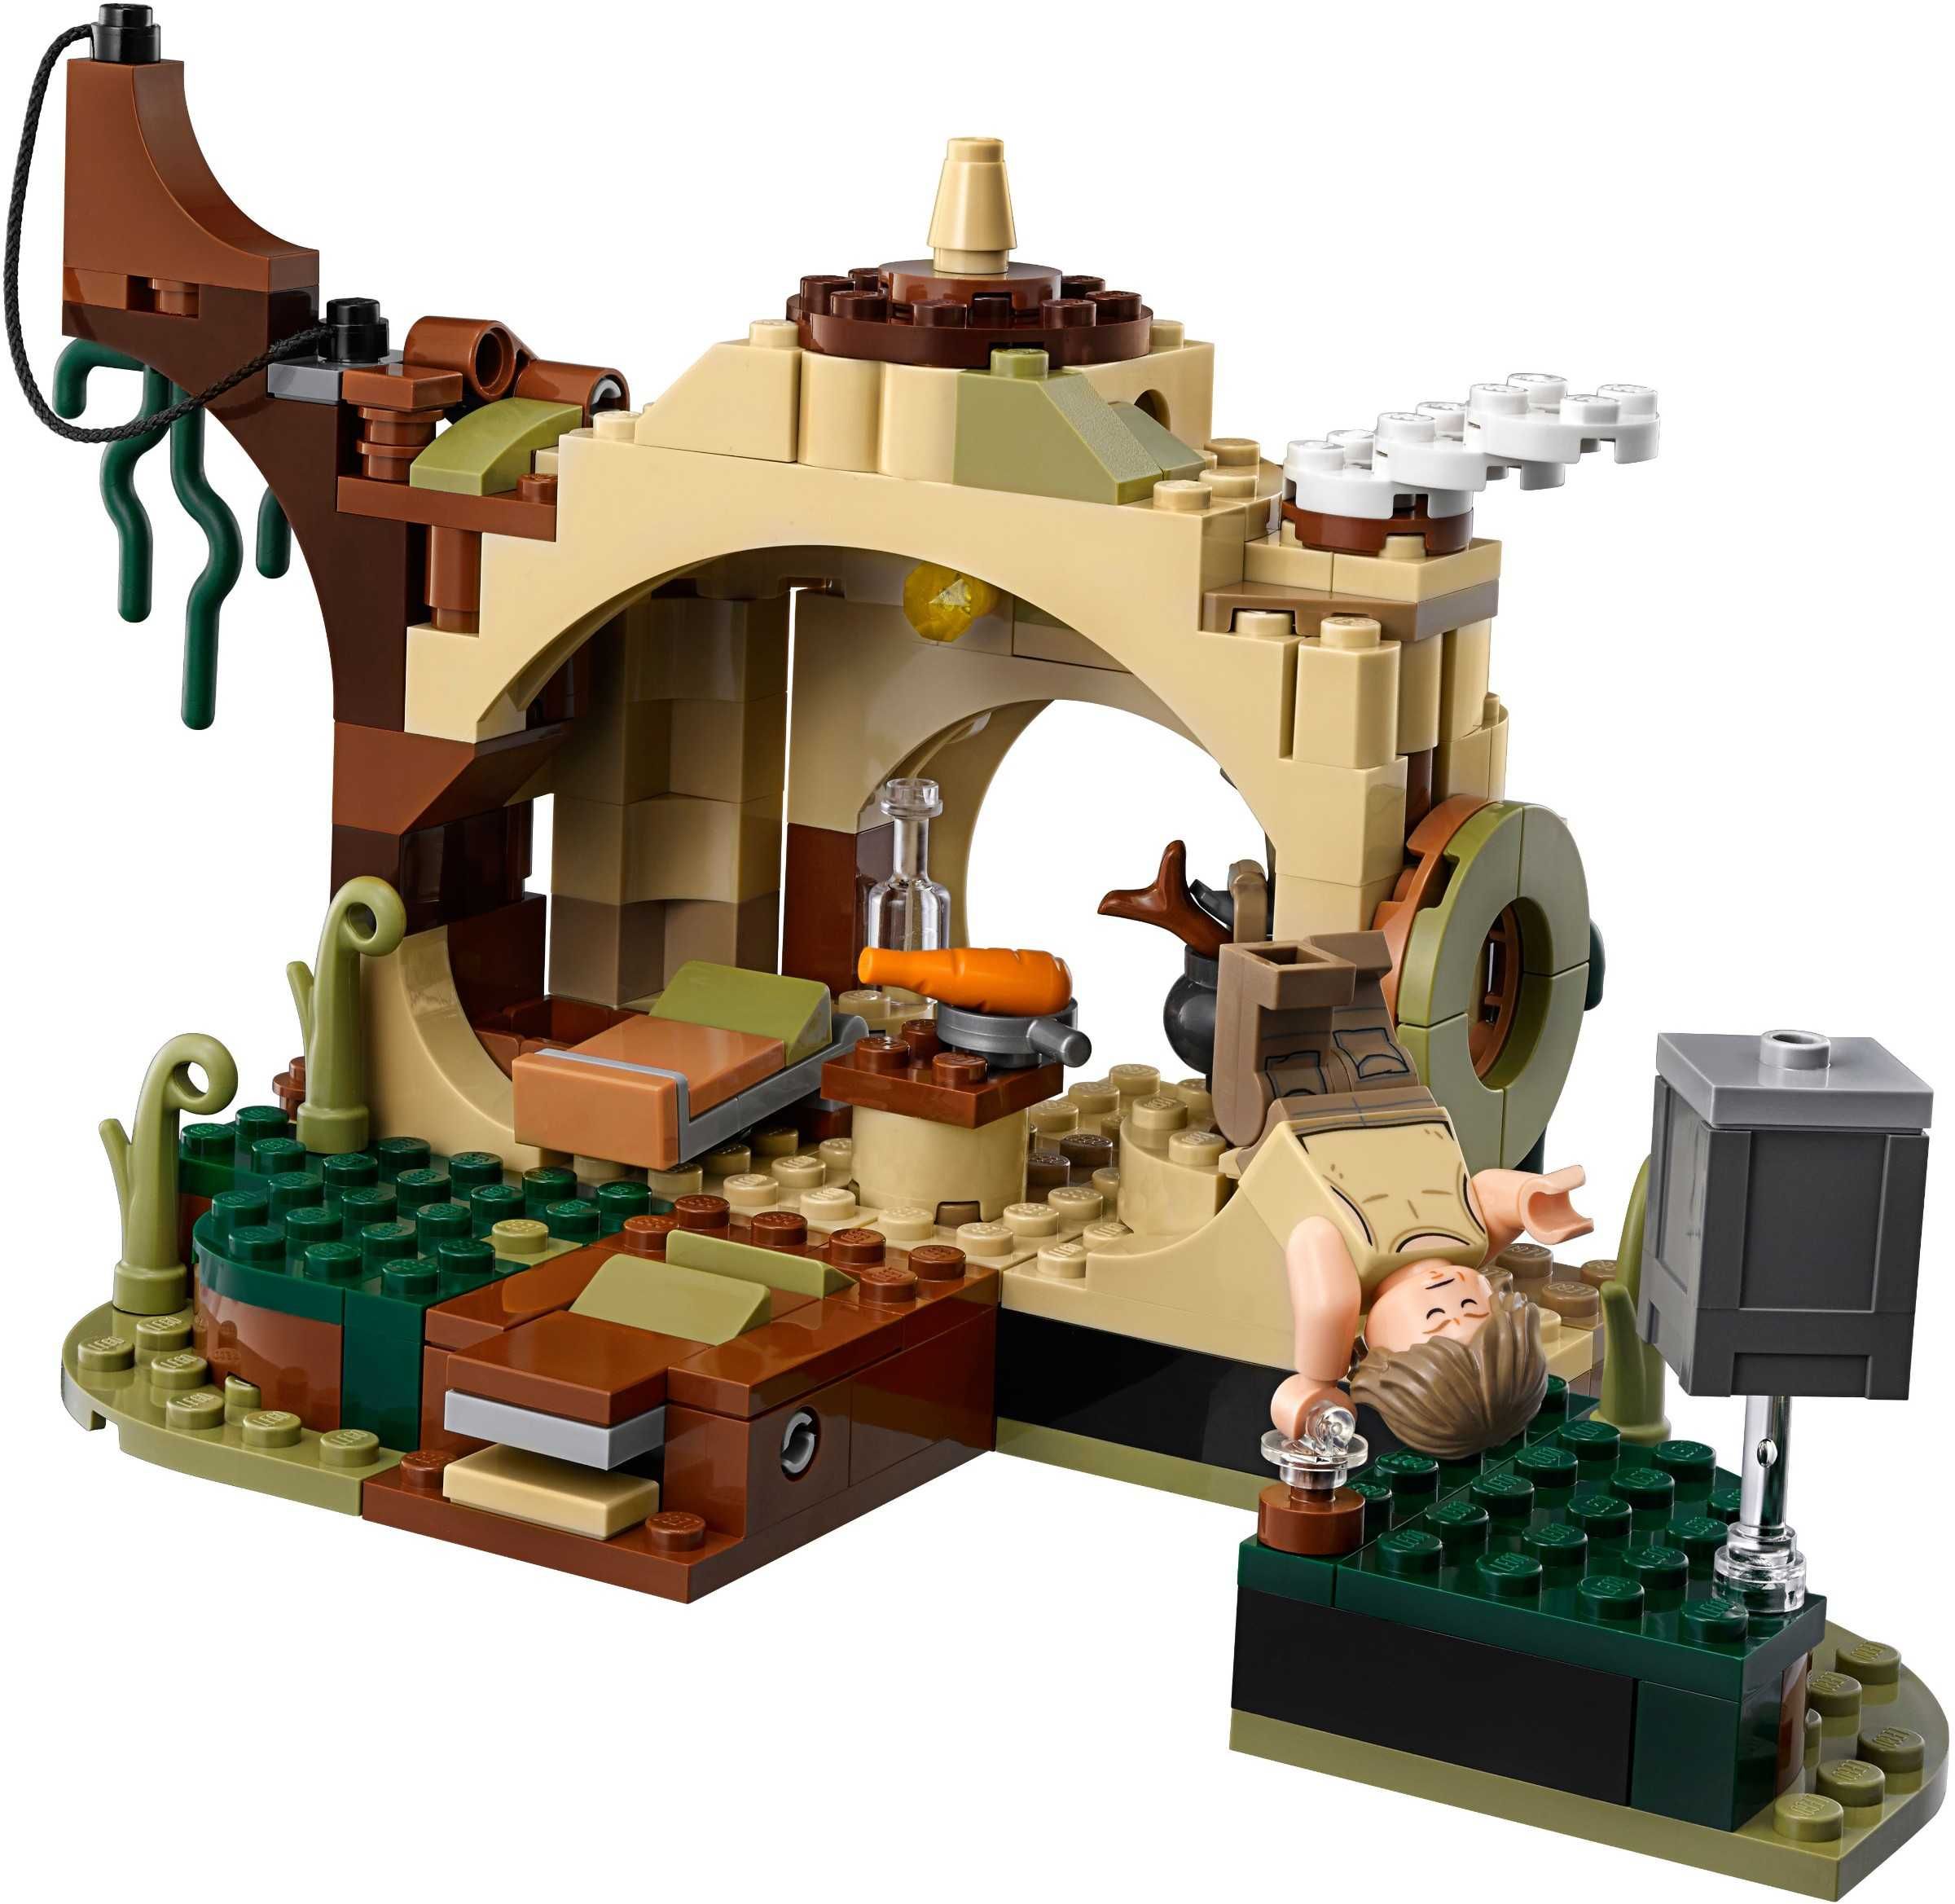 LEGO Star Wars 75208 : Yoda's Hut - Coliba lui Yoda - set de colectie